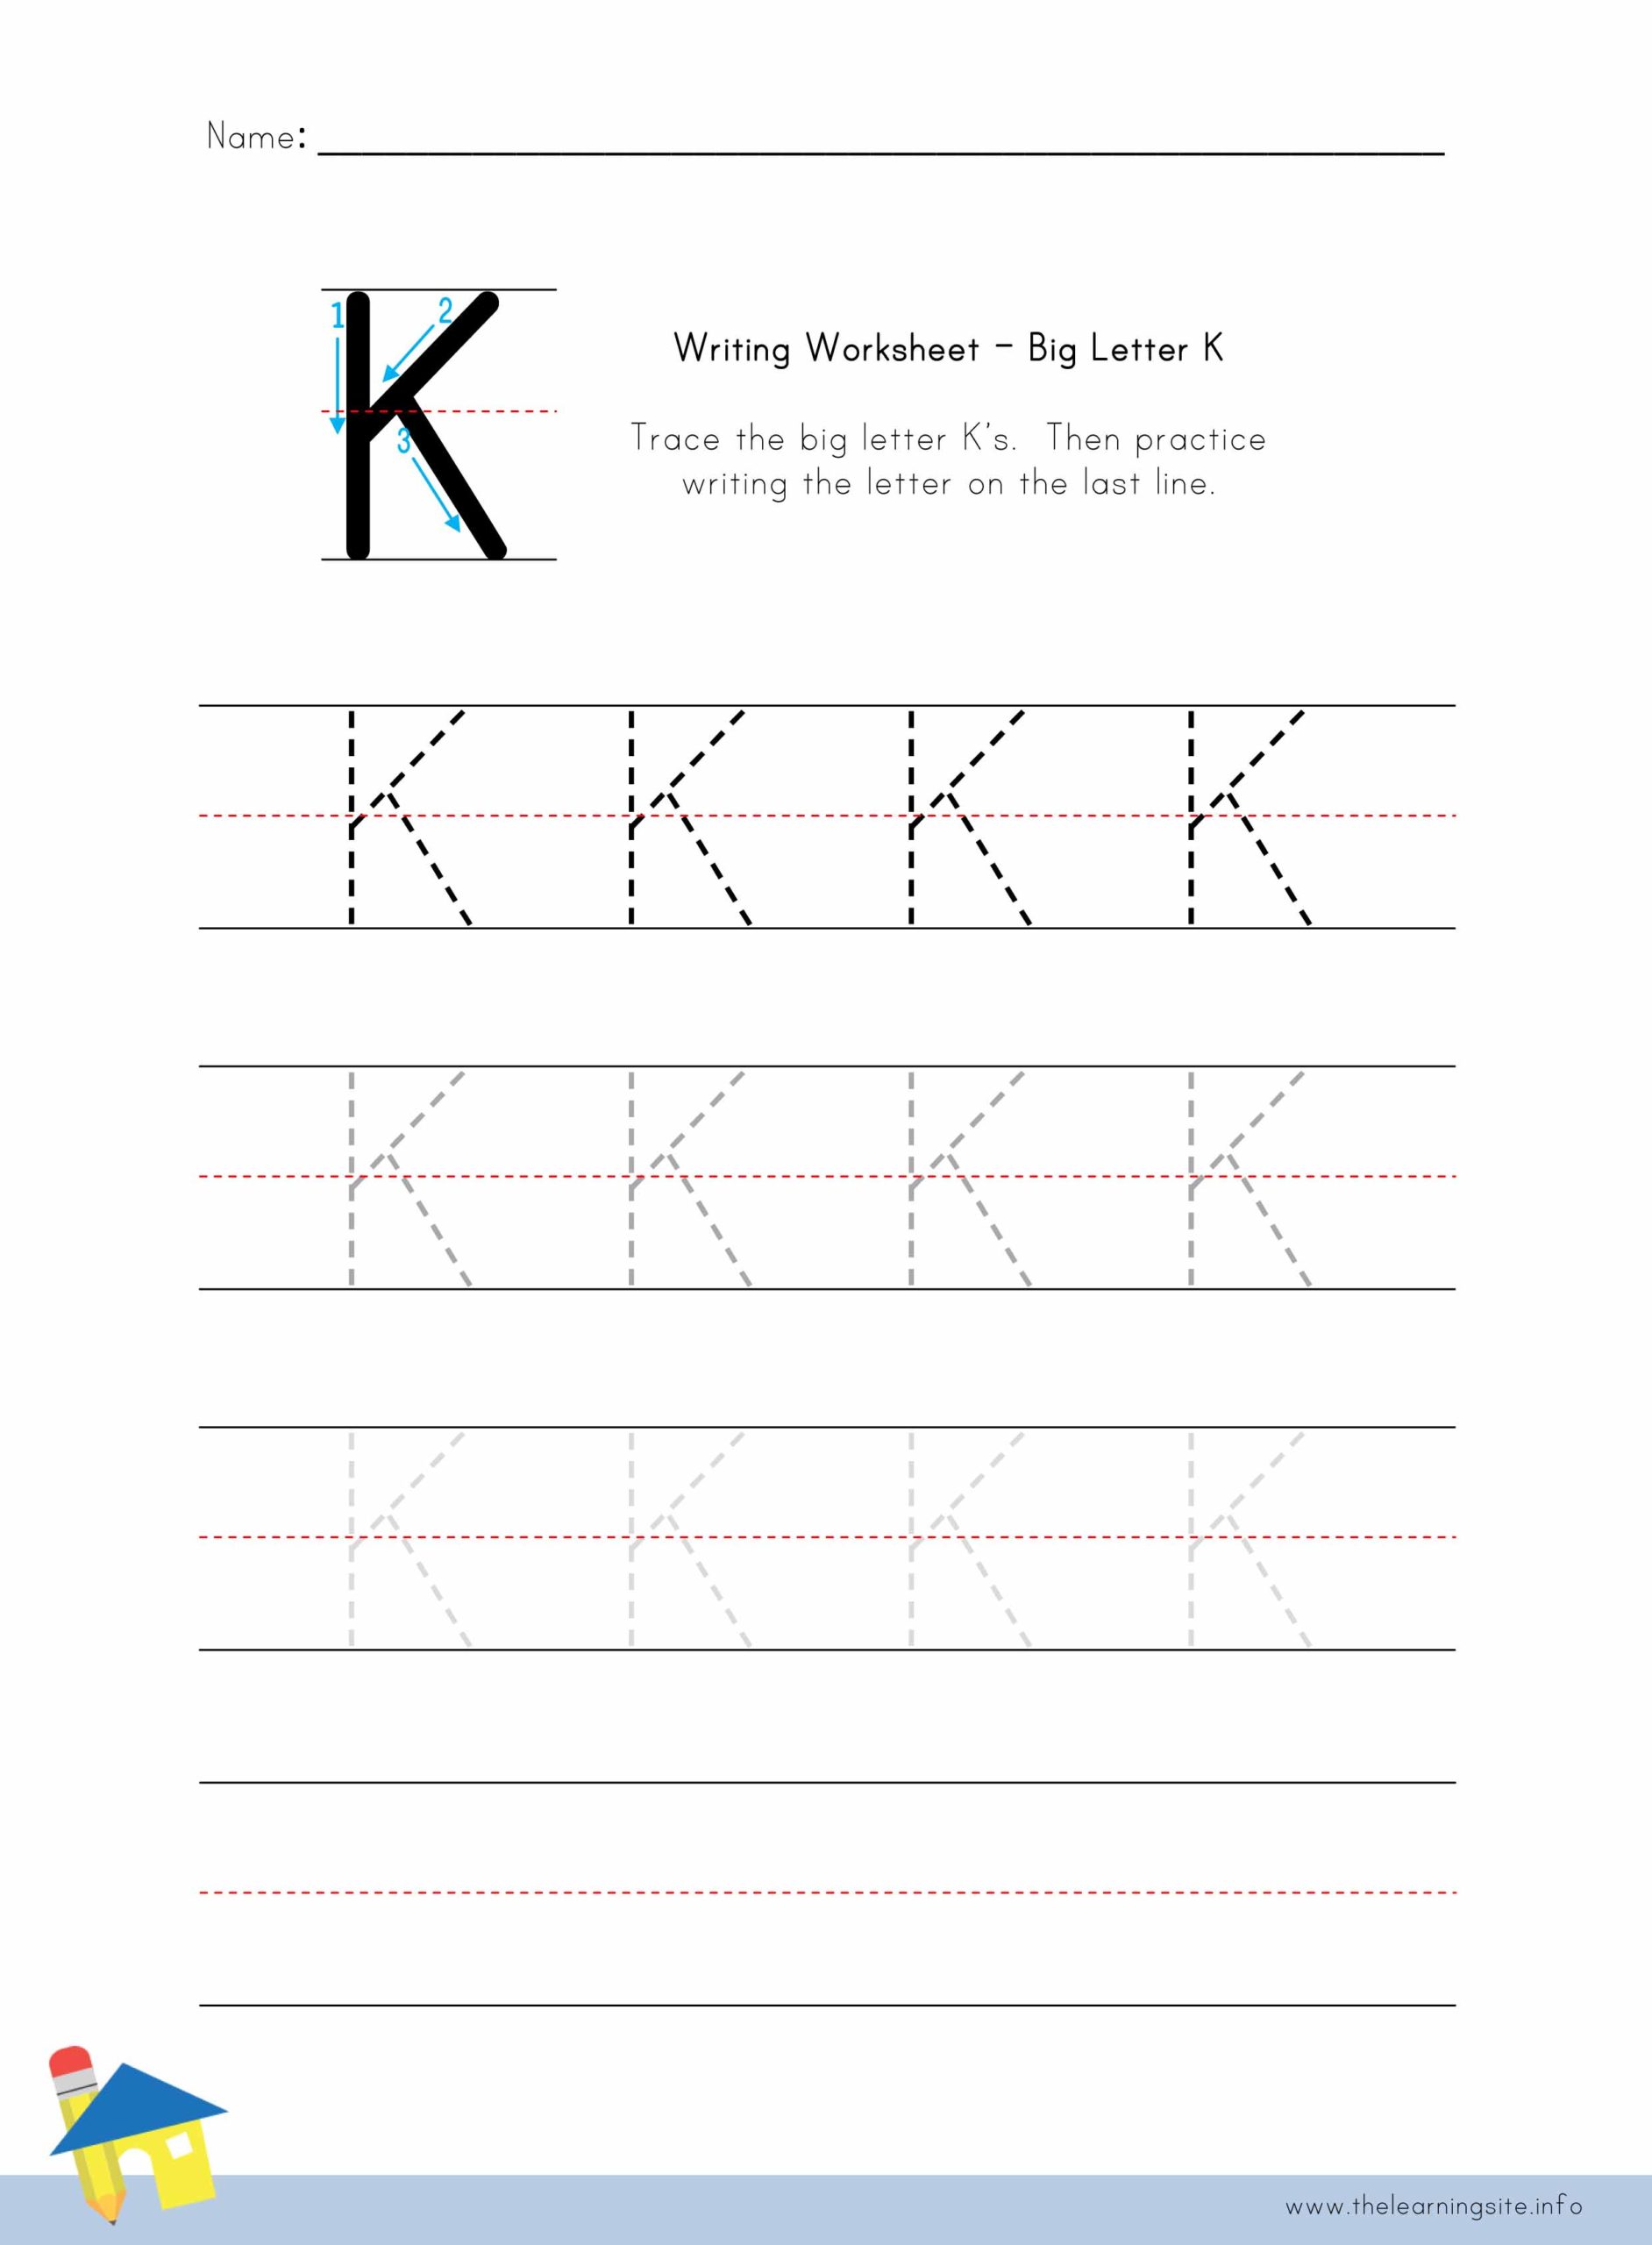 big-letter-k-writing-worksheet-the-learning-site